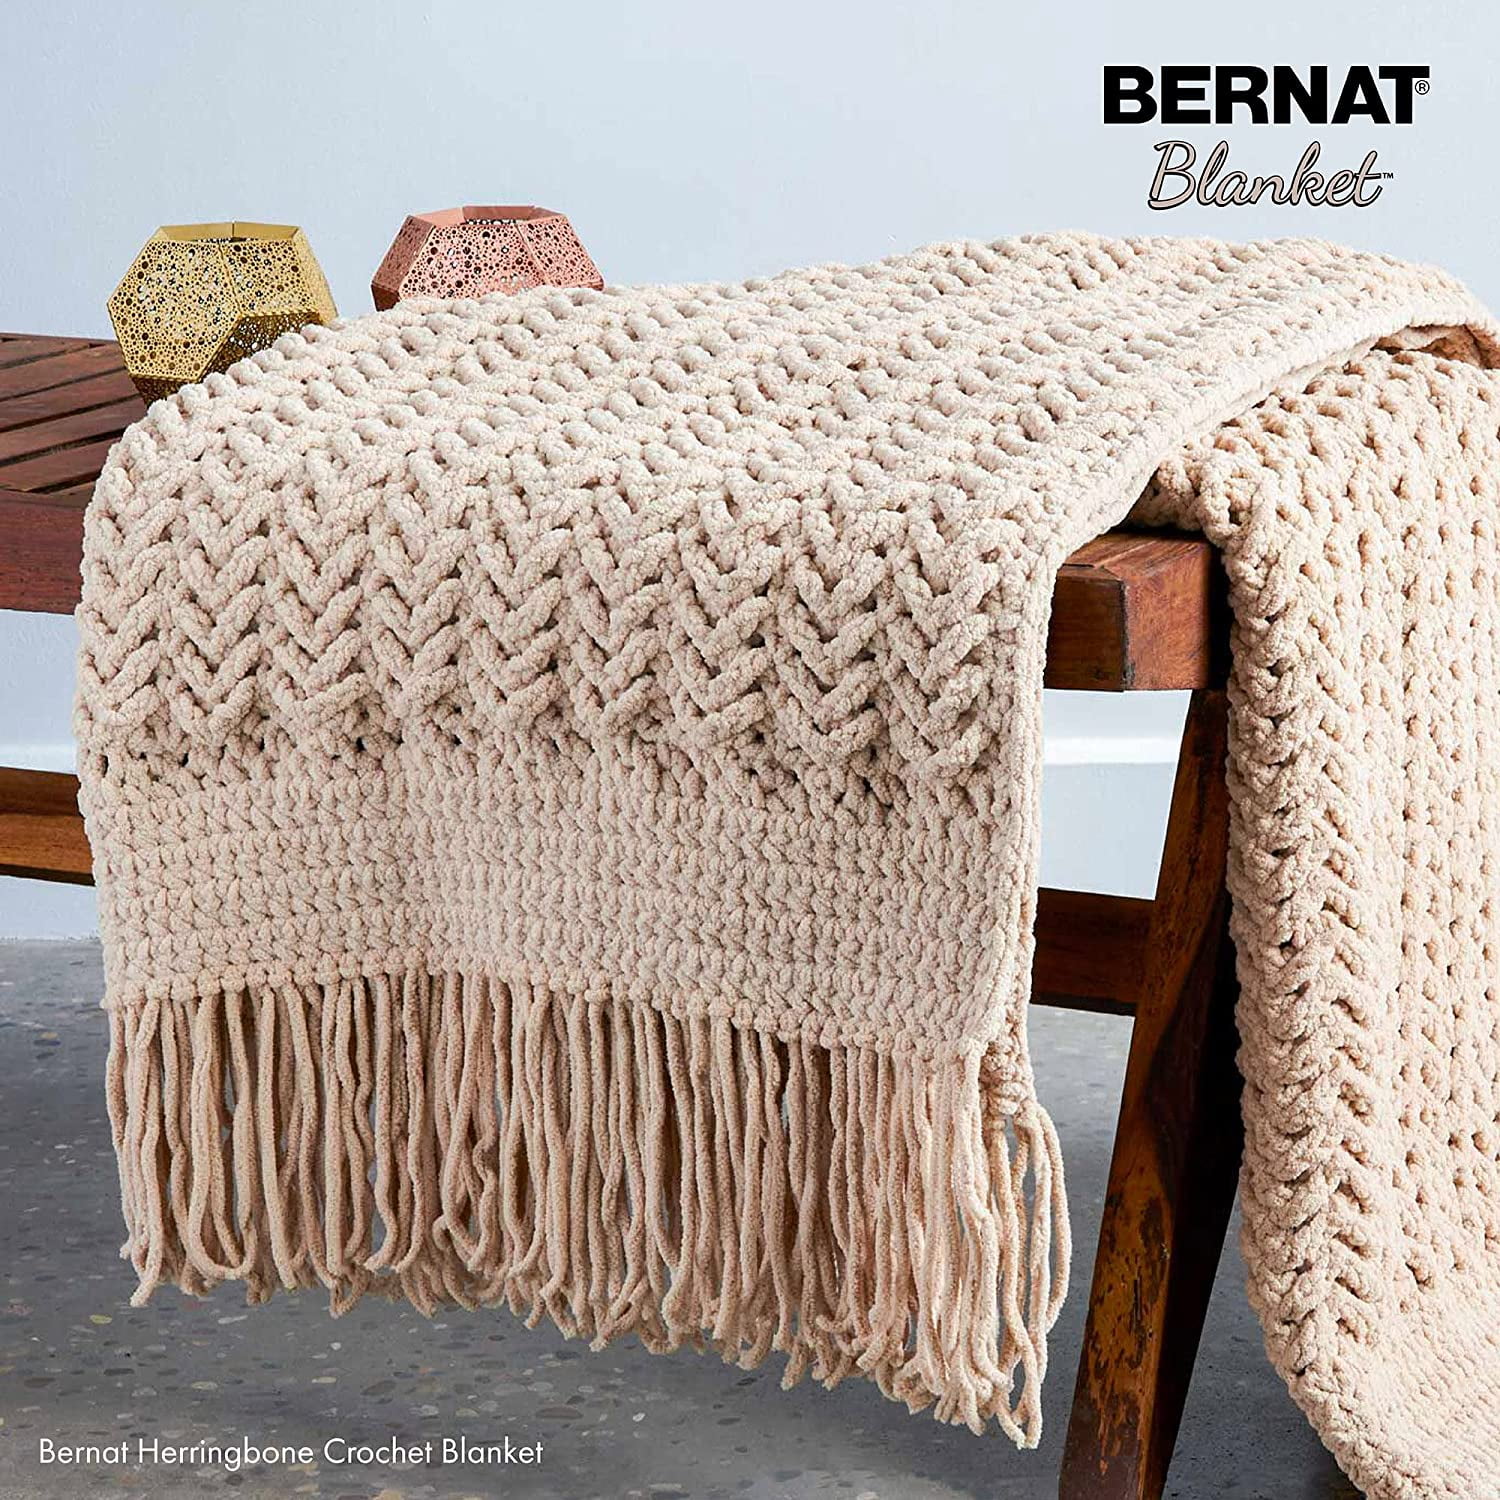 Bernat® Blanket™ Yarn